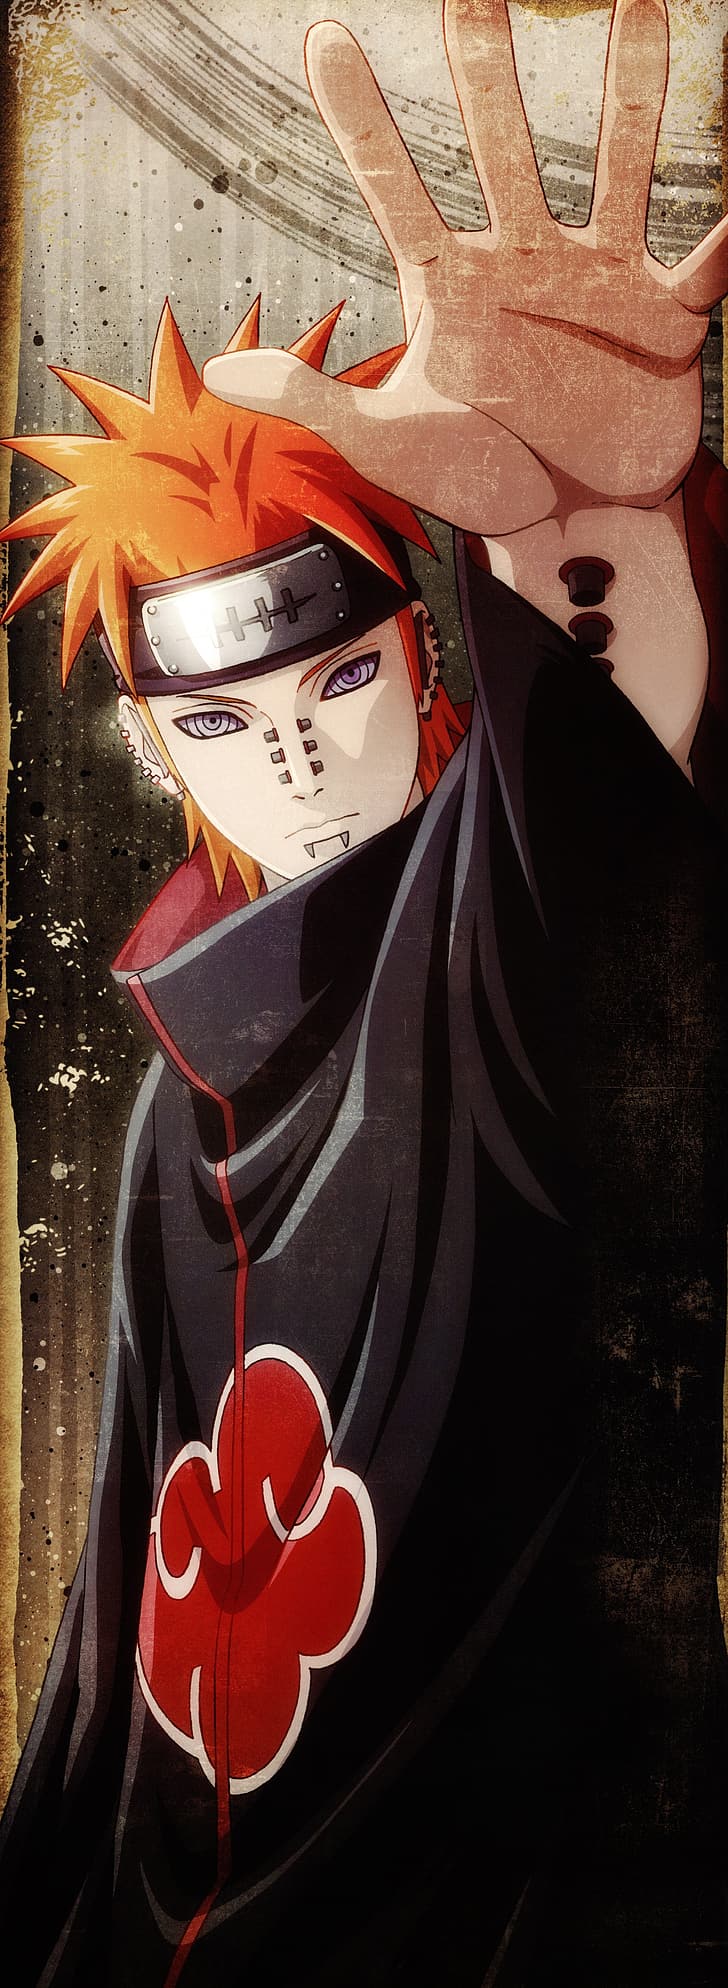 Page 3 Akatsuki Naruto 1080p 2k 4k 5k Hd Wallpapers Free Download Wallpaper Flare